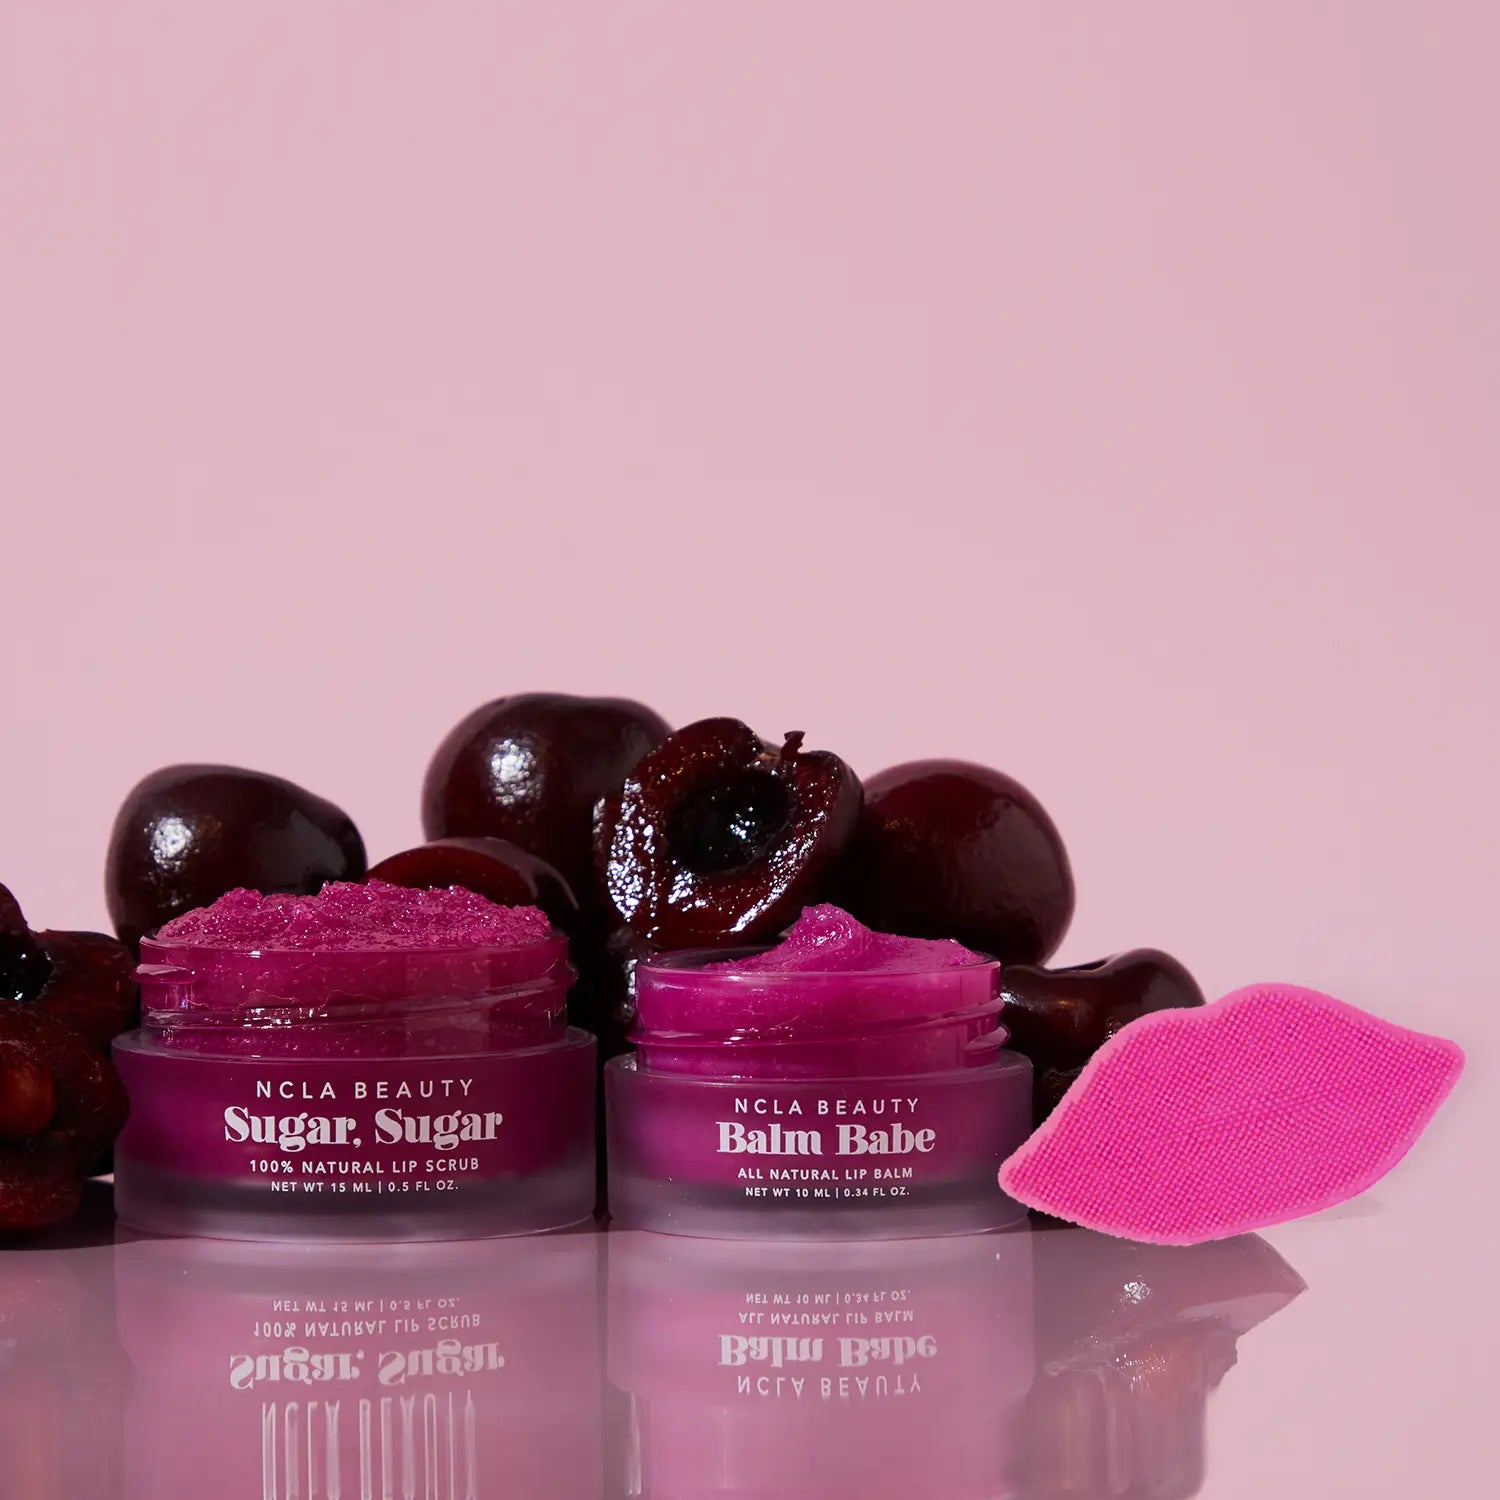 NCLA Beauty - Black Cherry Lip Care Set + Lip Scrubber